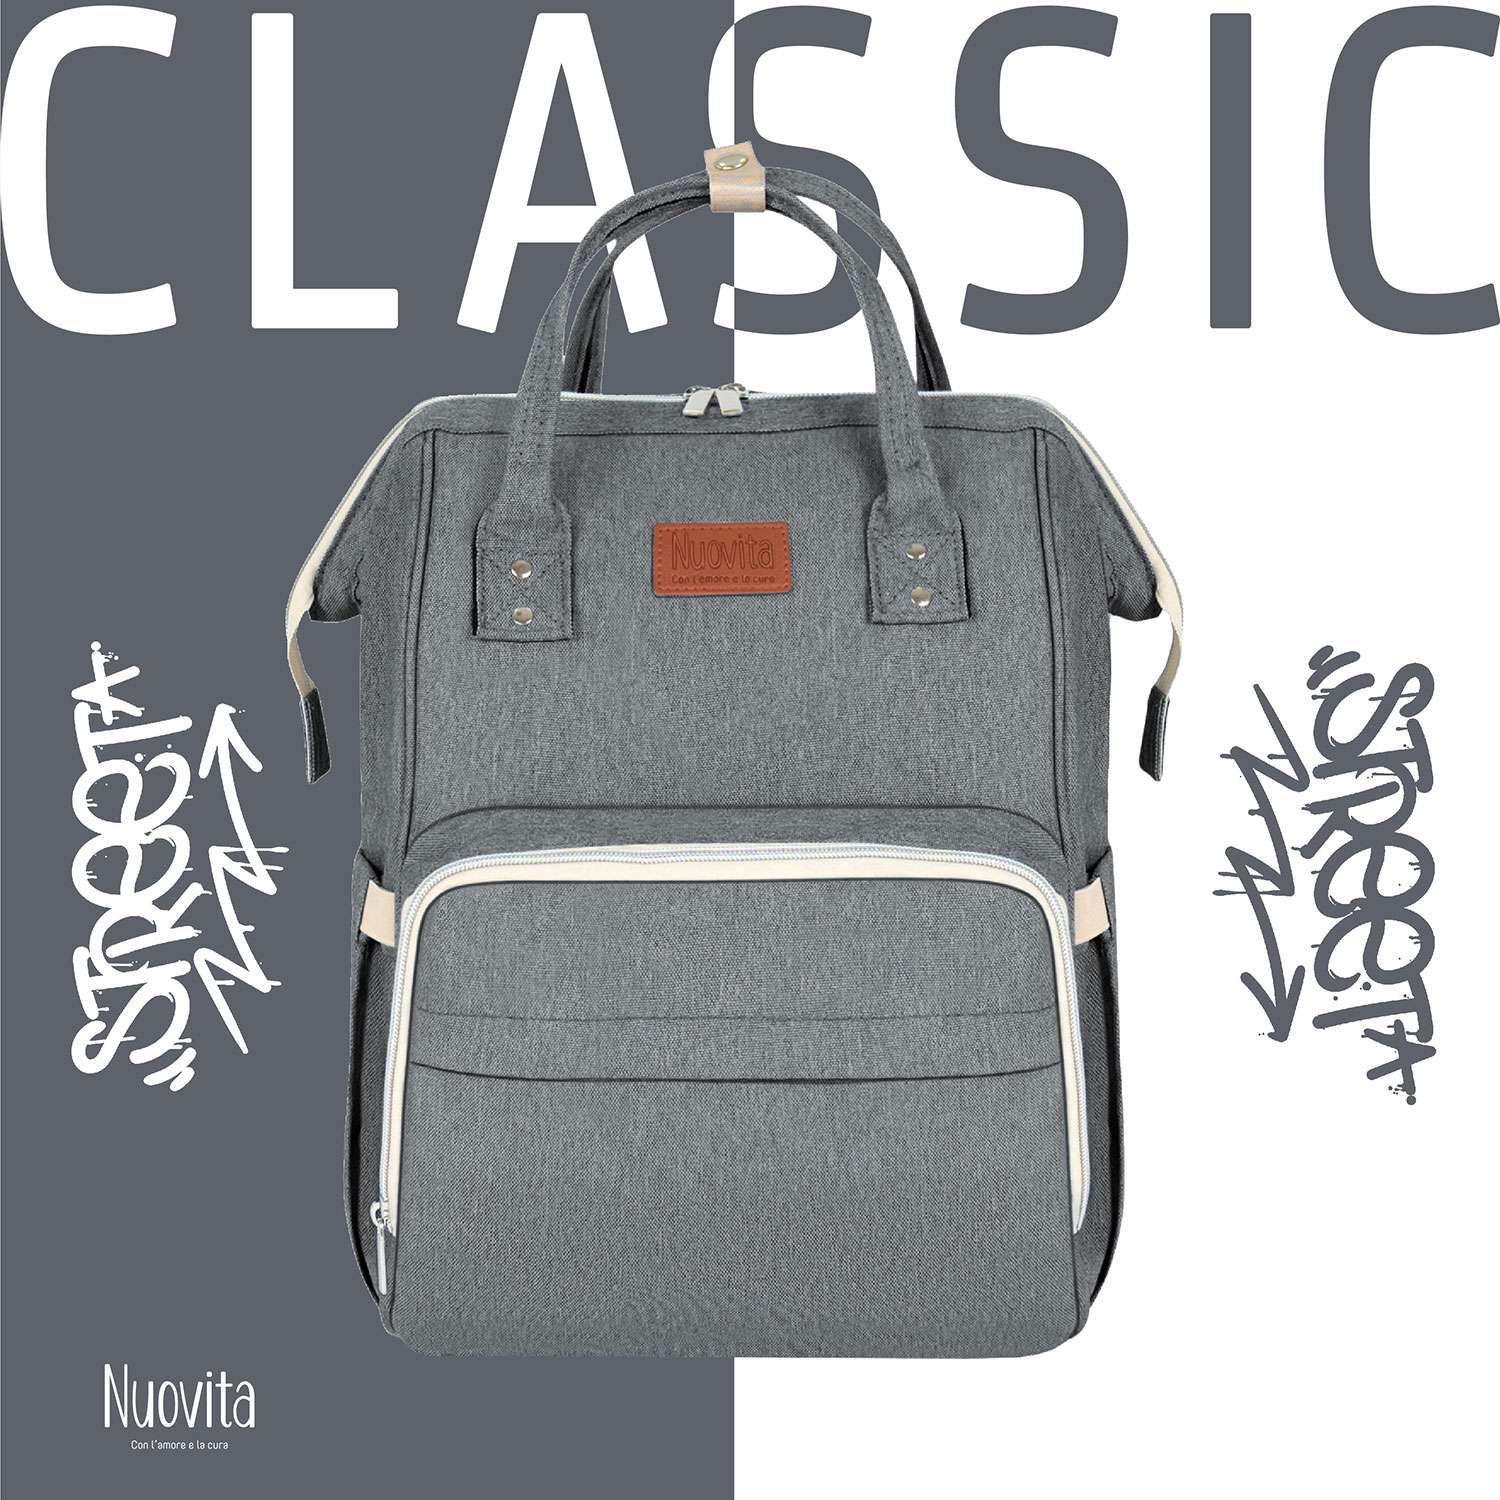 Рюкзак для мамы Nuovita CAPCAP classic Серый - фото 2